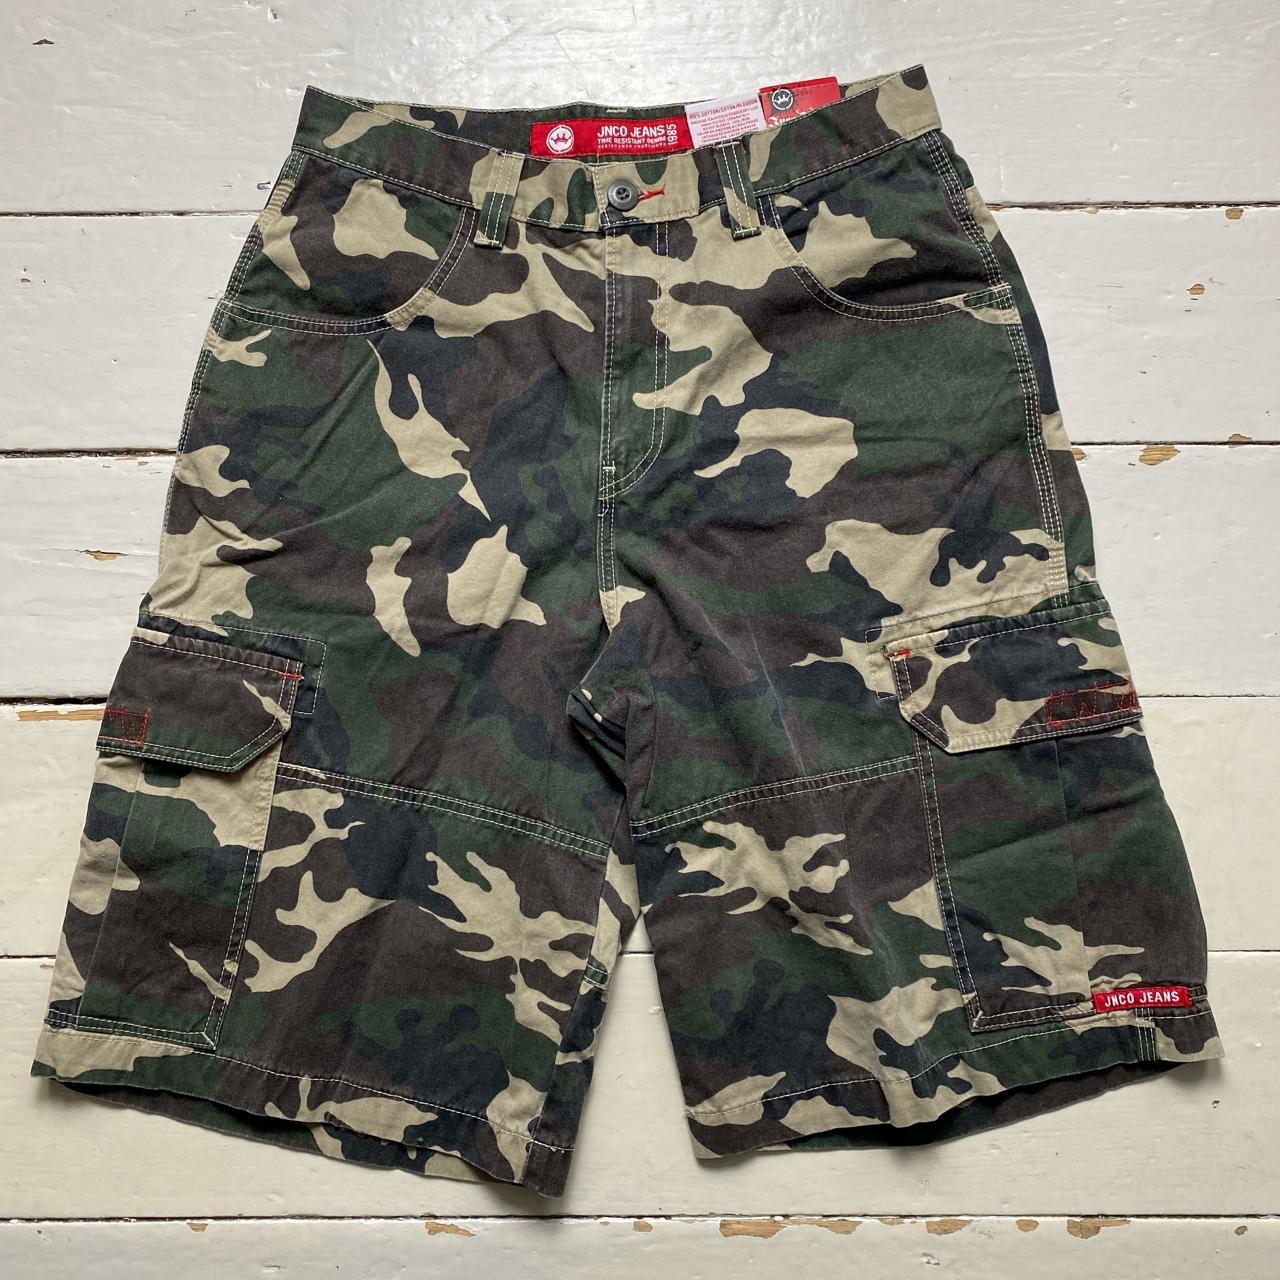 JNCO Jeans Camouflage Cargo Shorts Jorts 🍃 Brand... - Depop